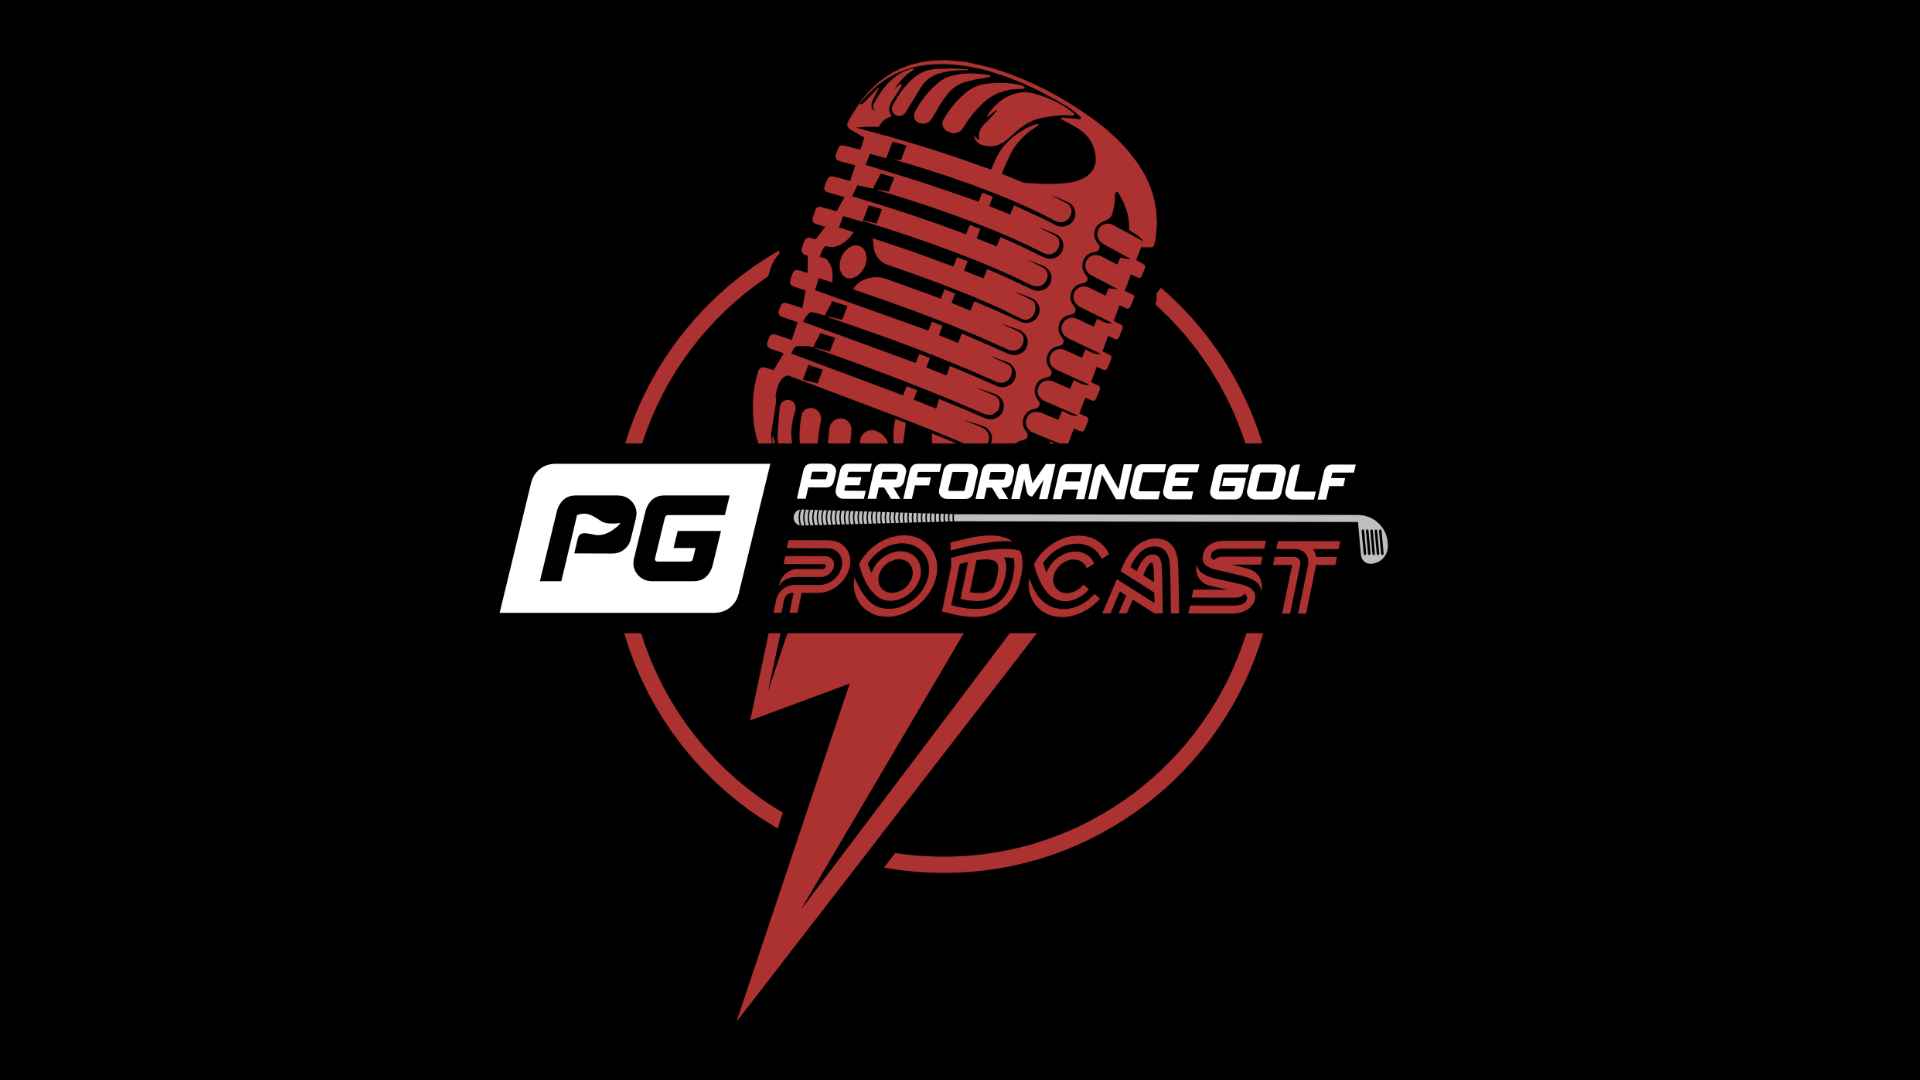 Performance golf podcast logo